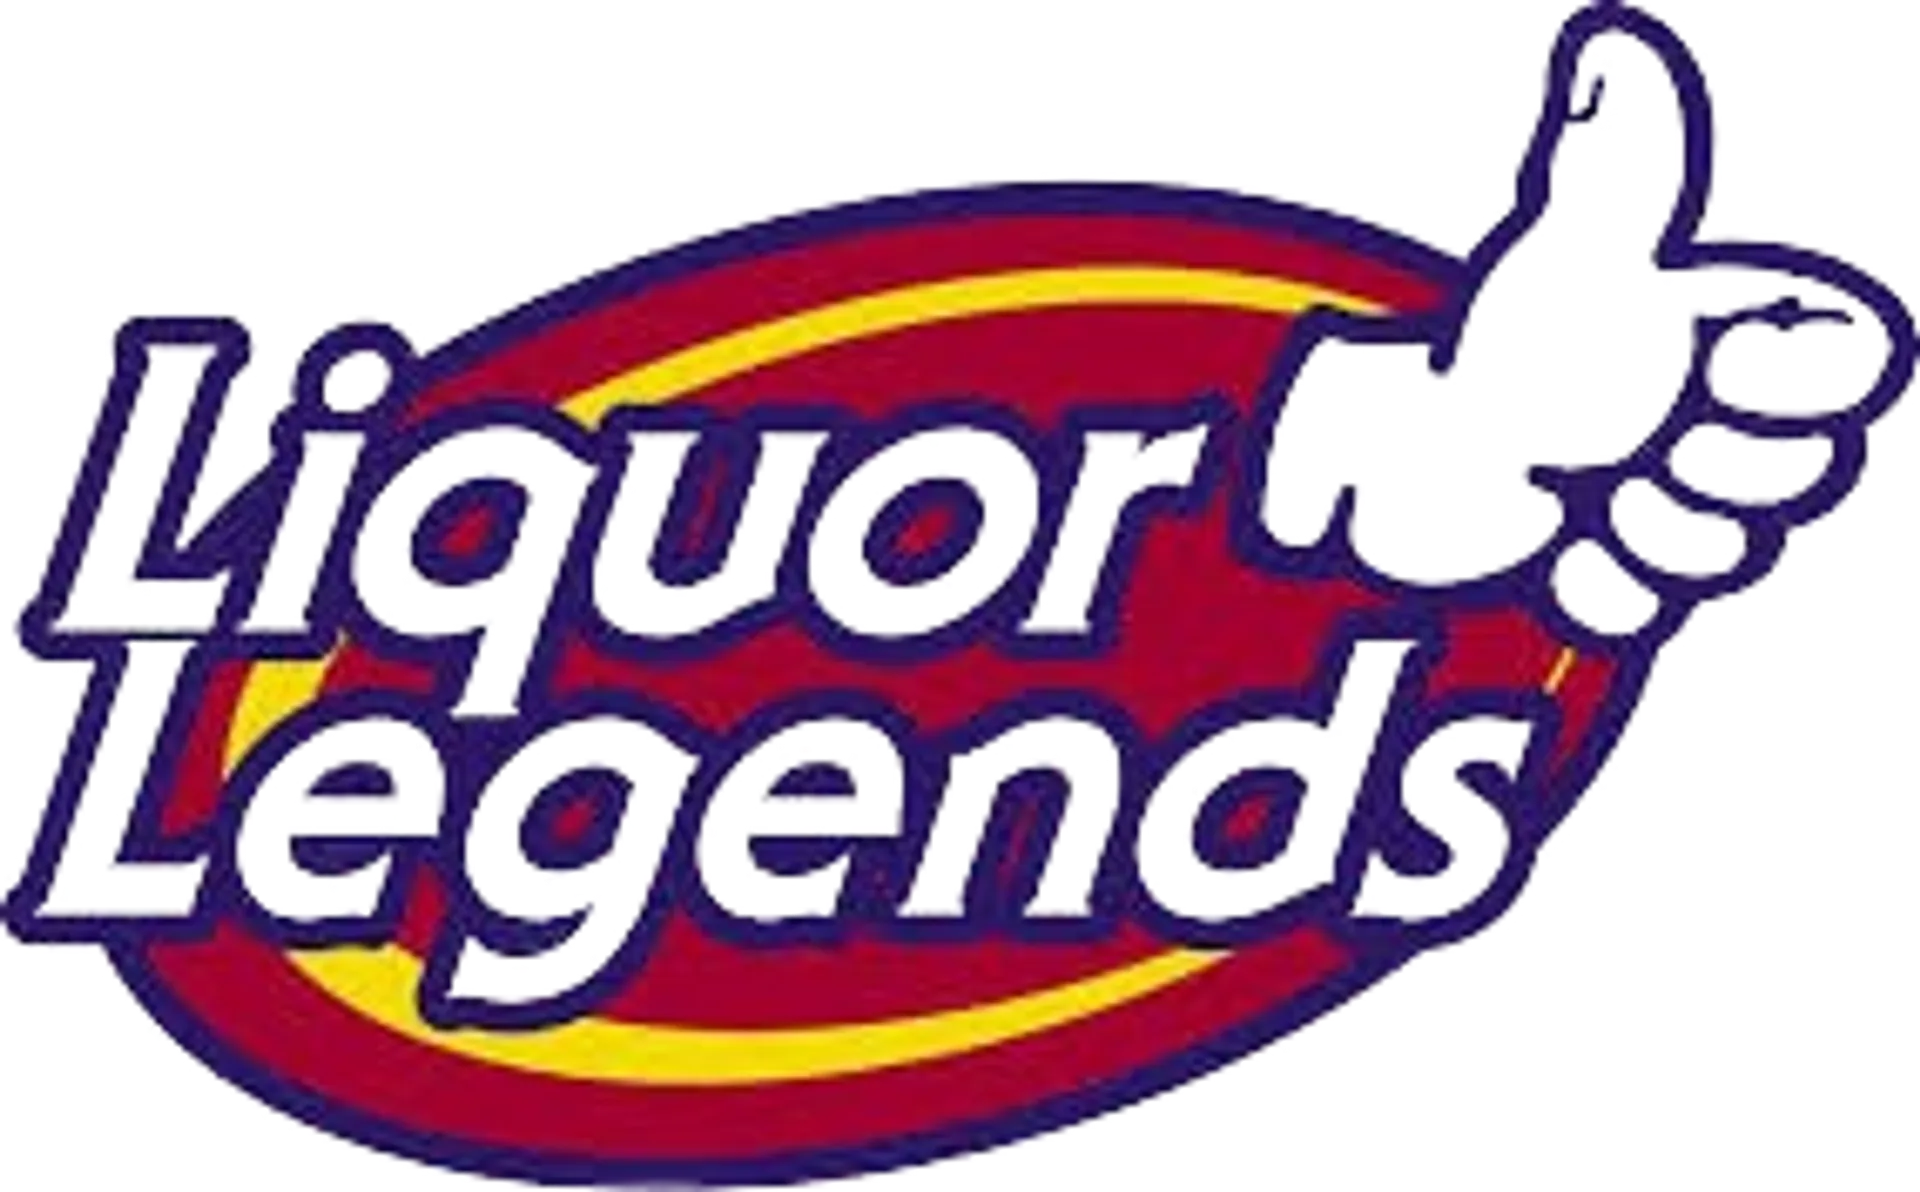 LIQUOR LEGENDS logo of current catalogue